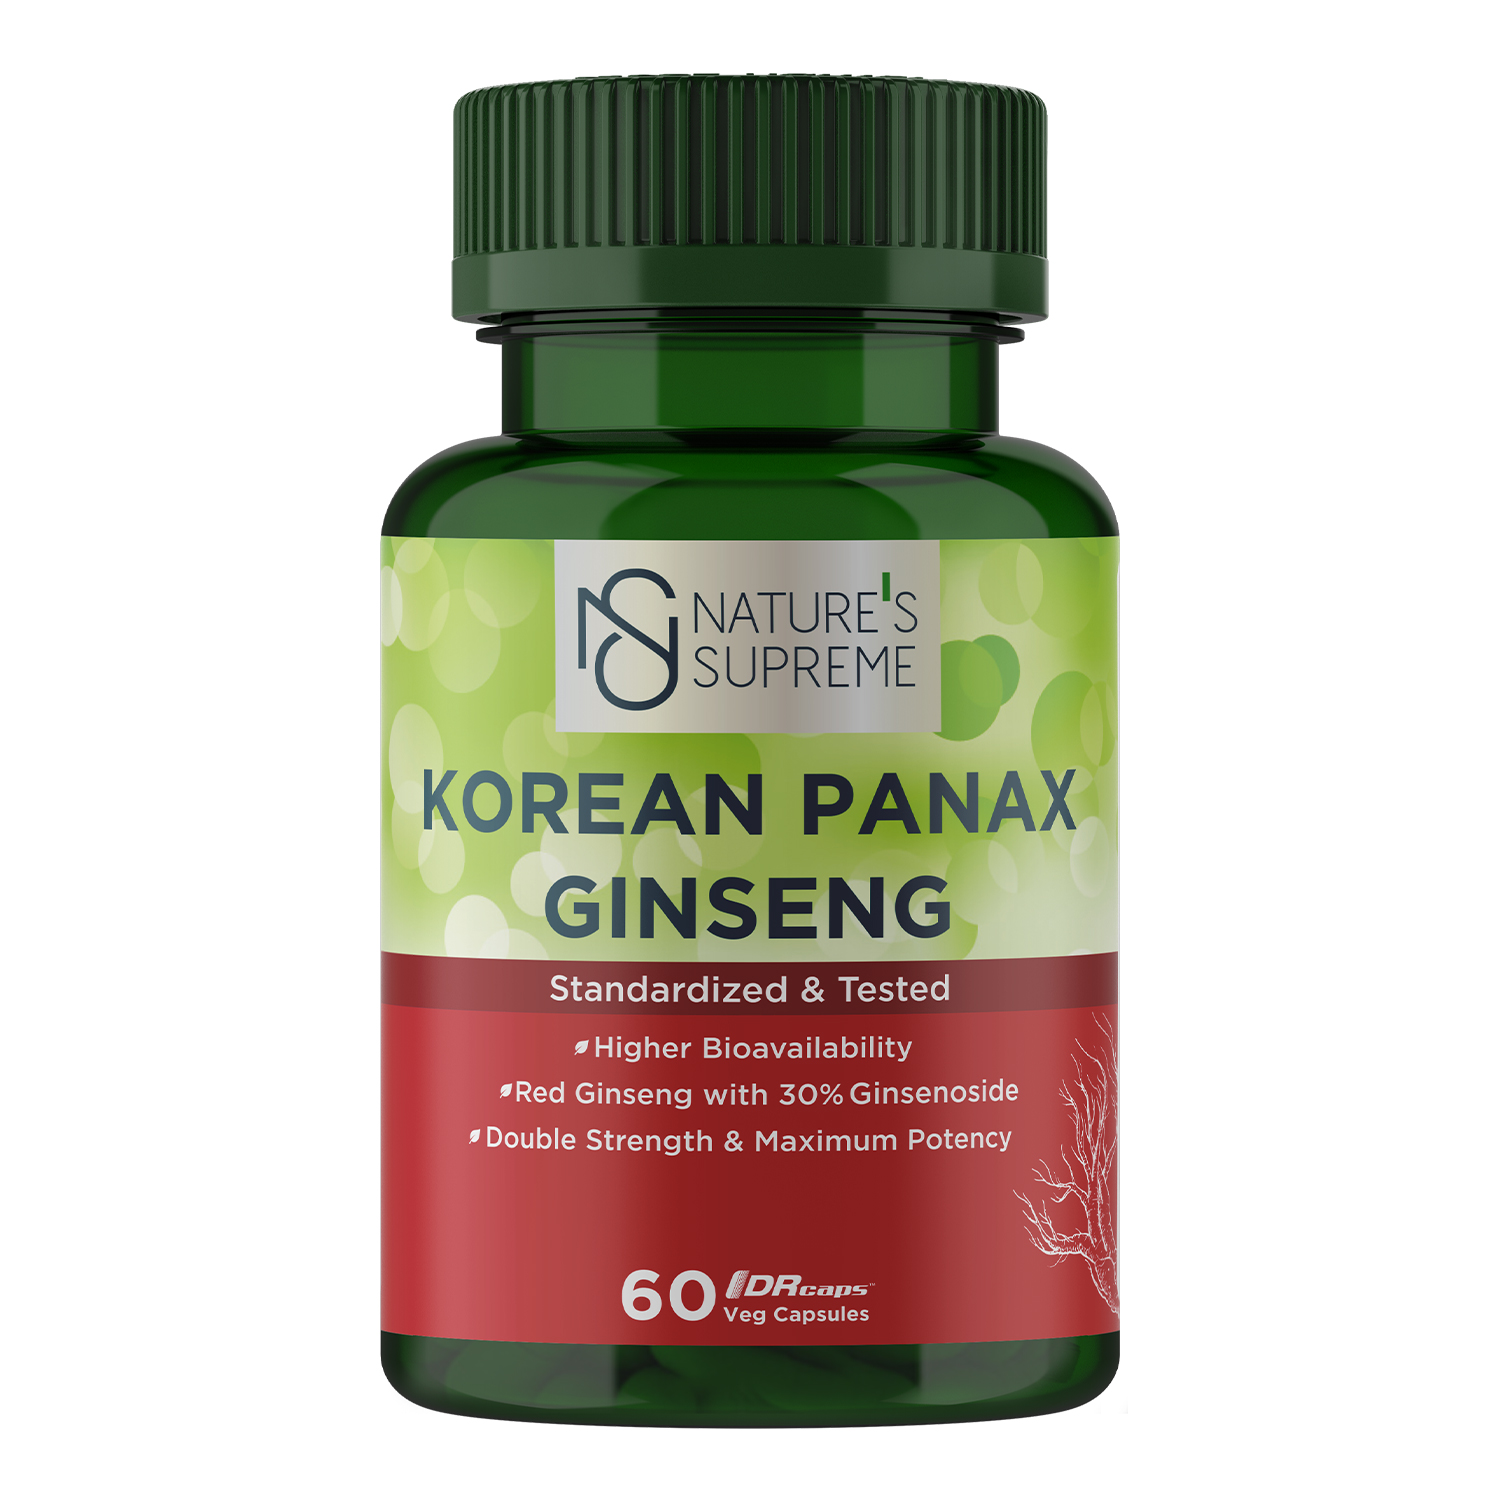 Korean Panax Ginseng